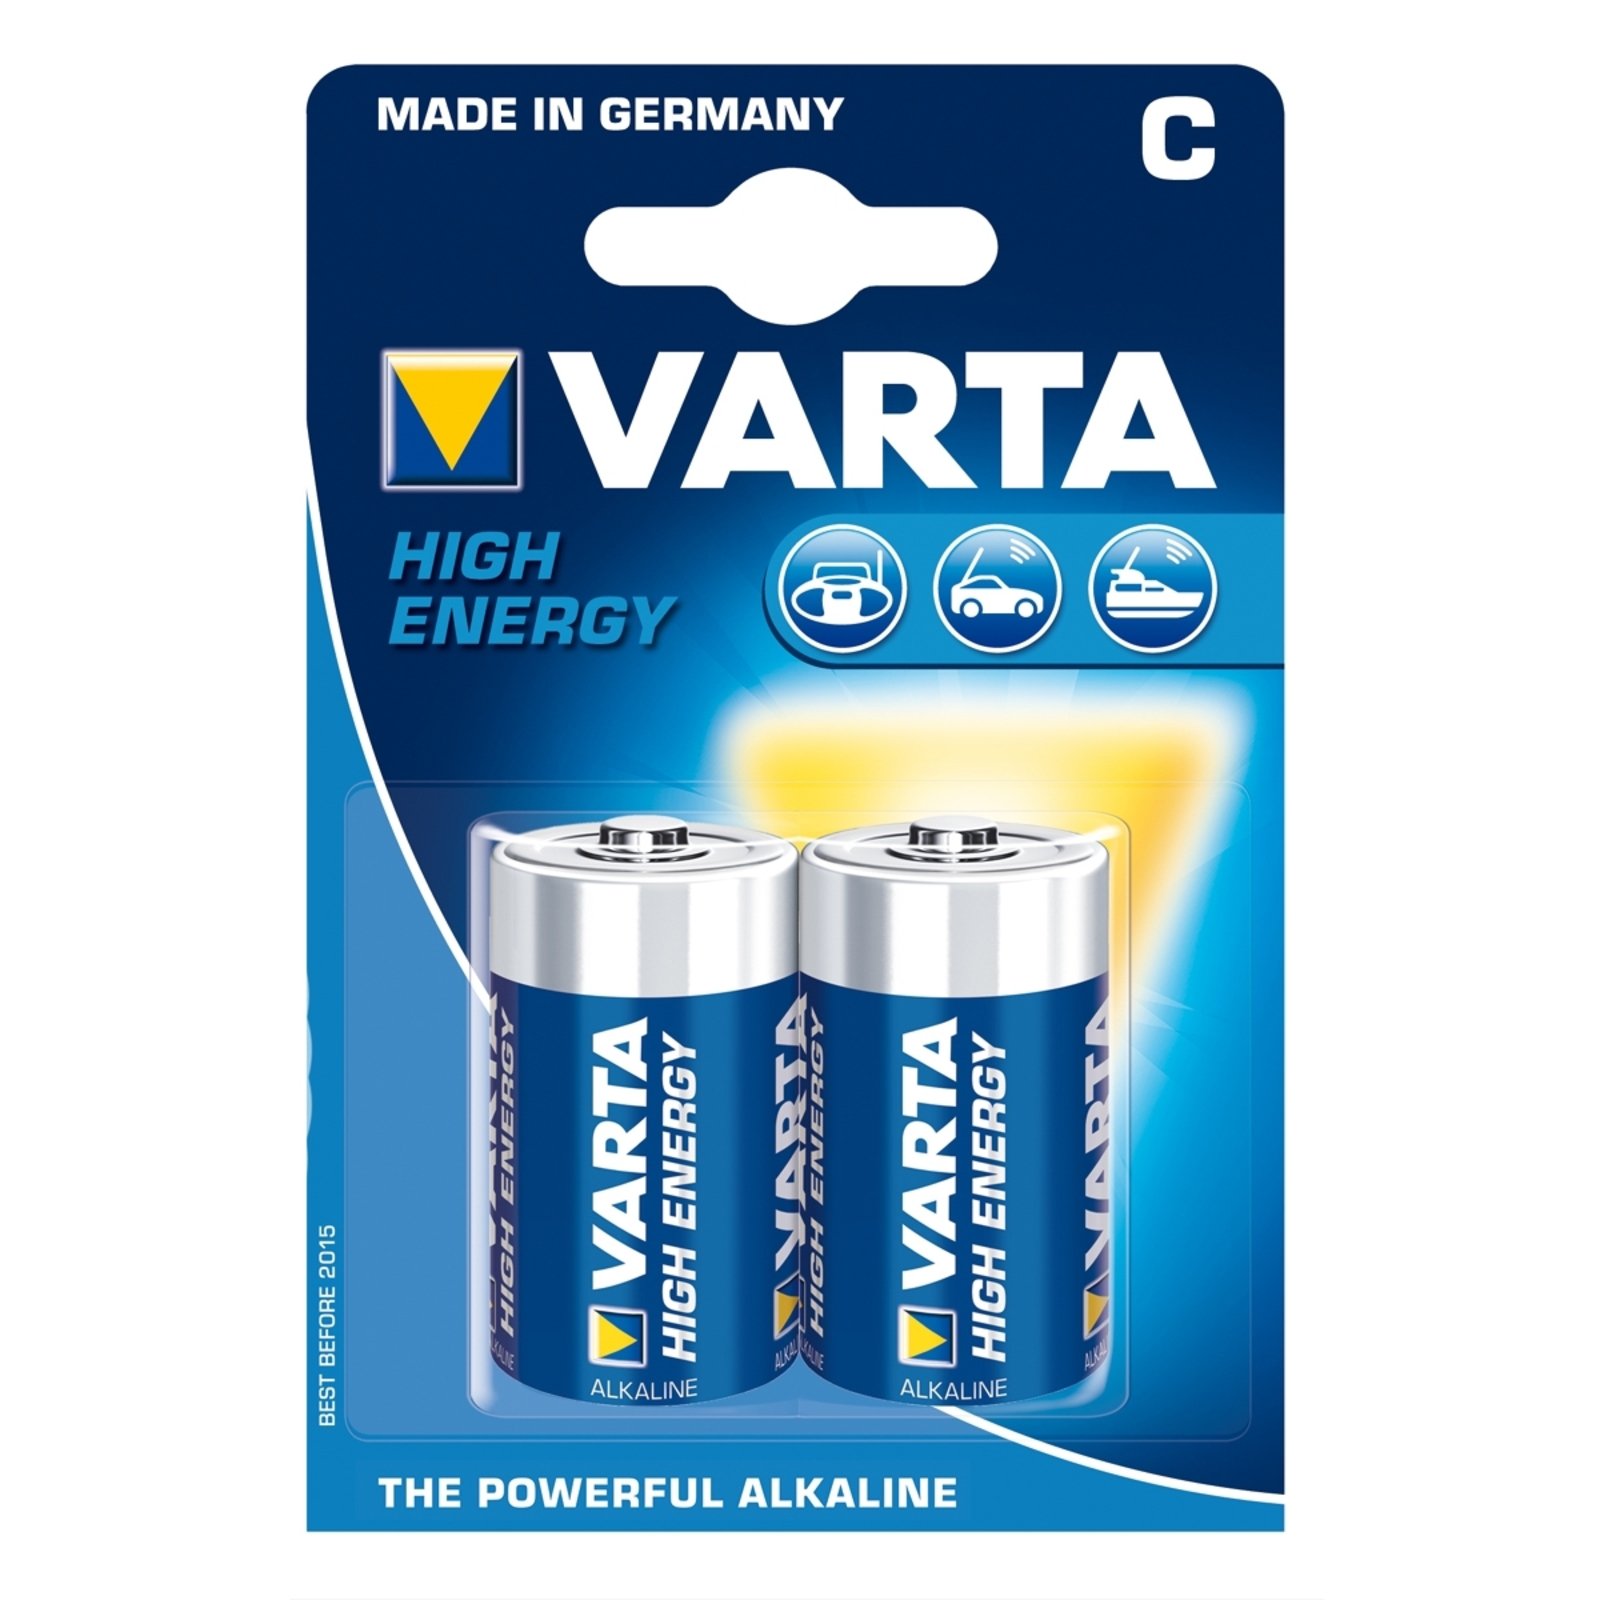 VARTA High Energy Batterien Baby 4914 - C